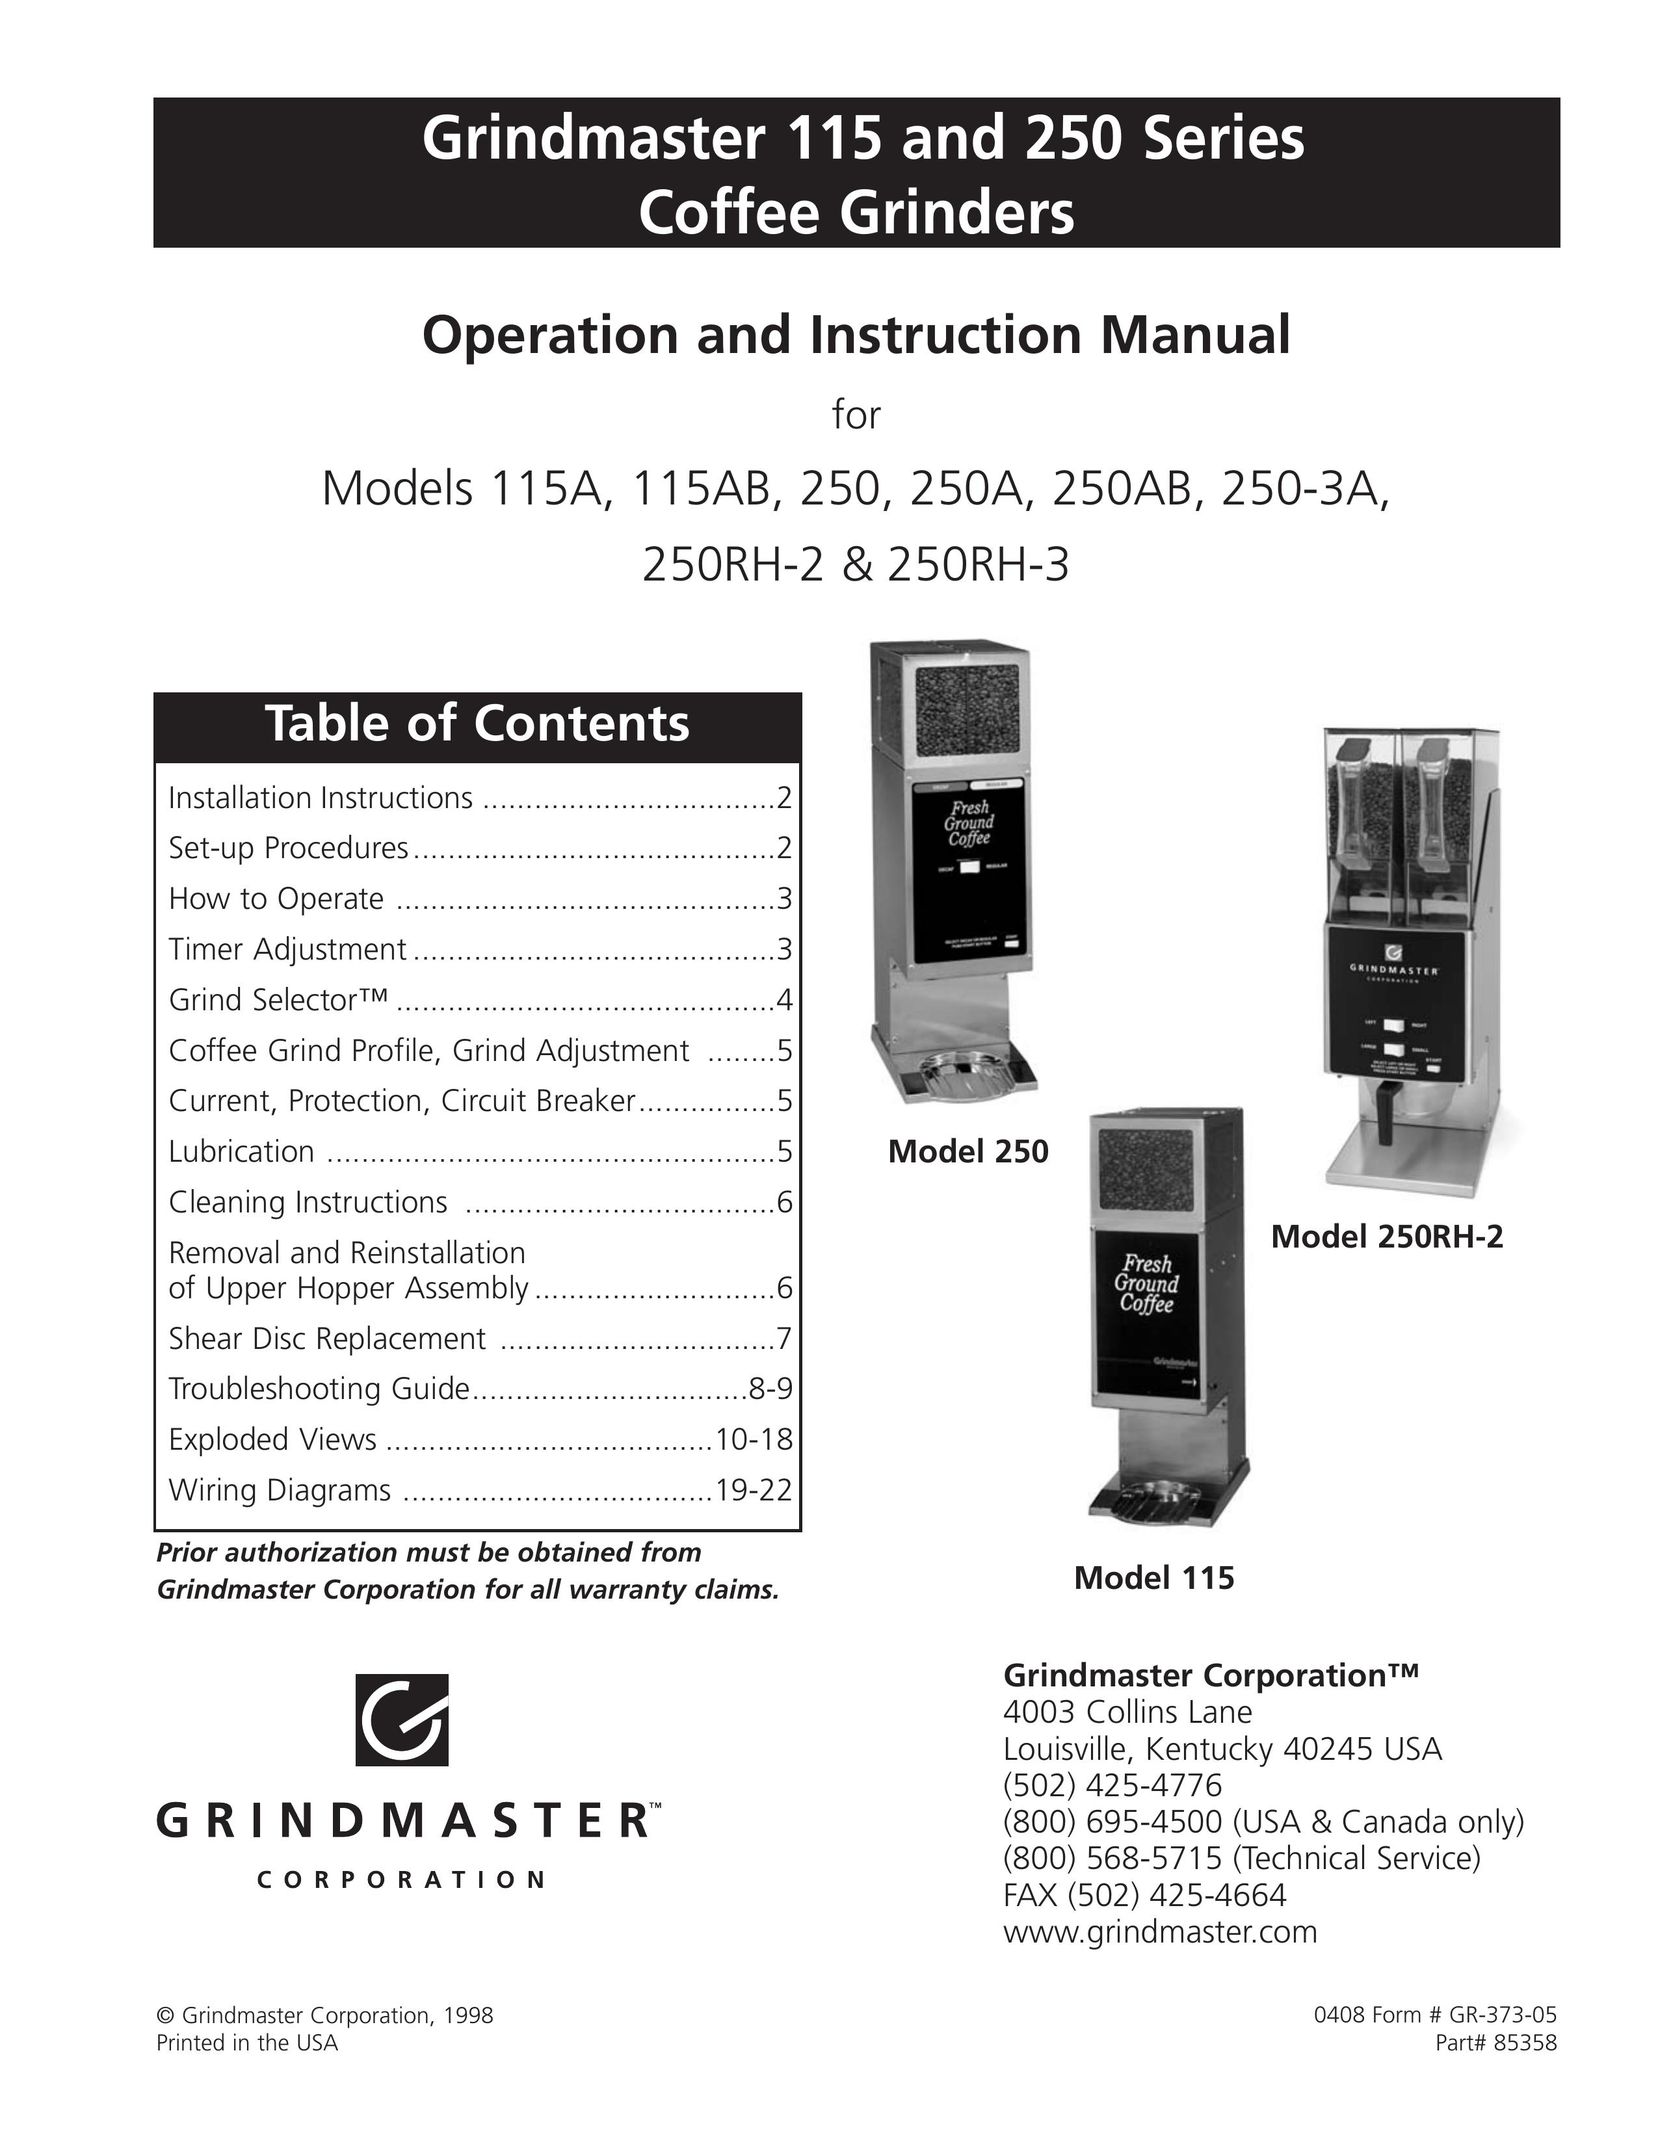 Grindmaster 115A Coffee Grinder User Manual